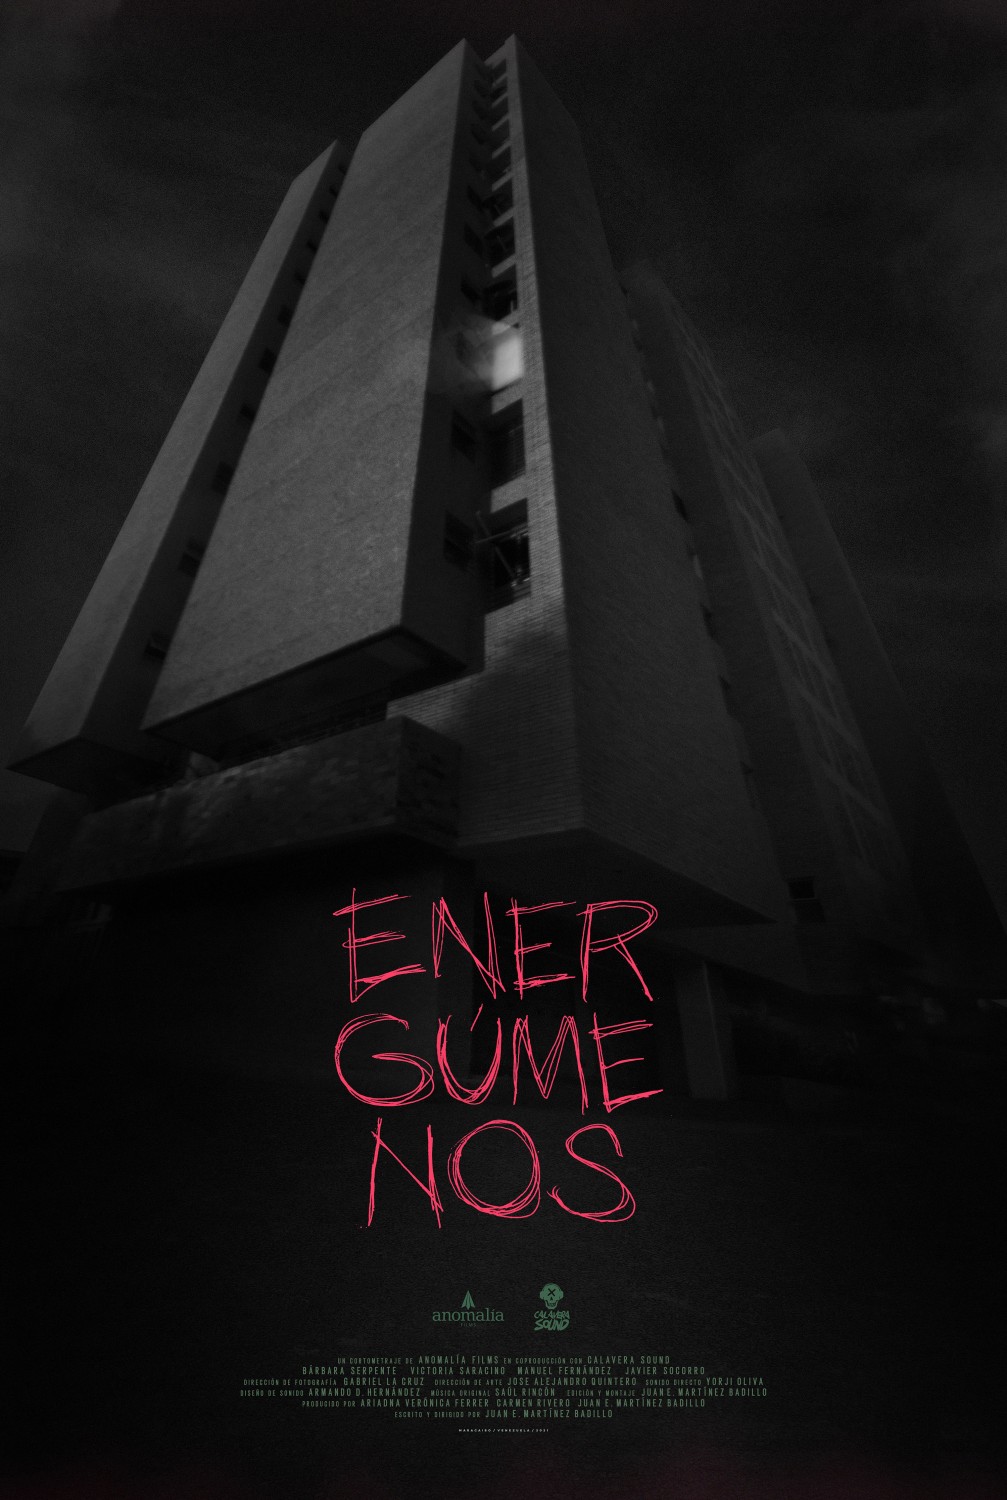 Extra Large Movie Poster Image for Energmenos